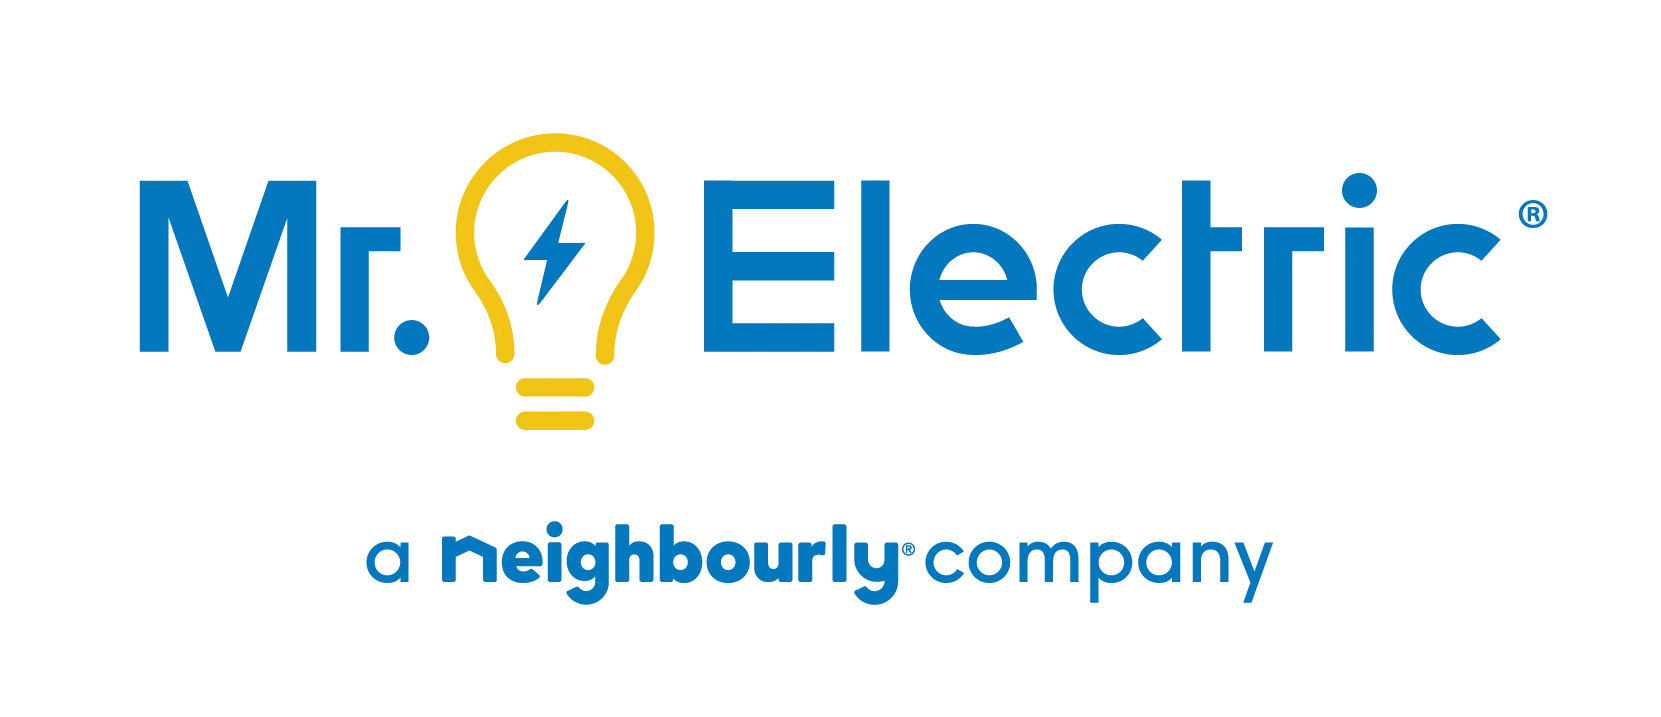 mr electric logo